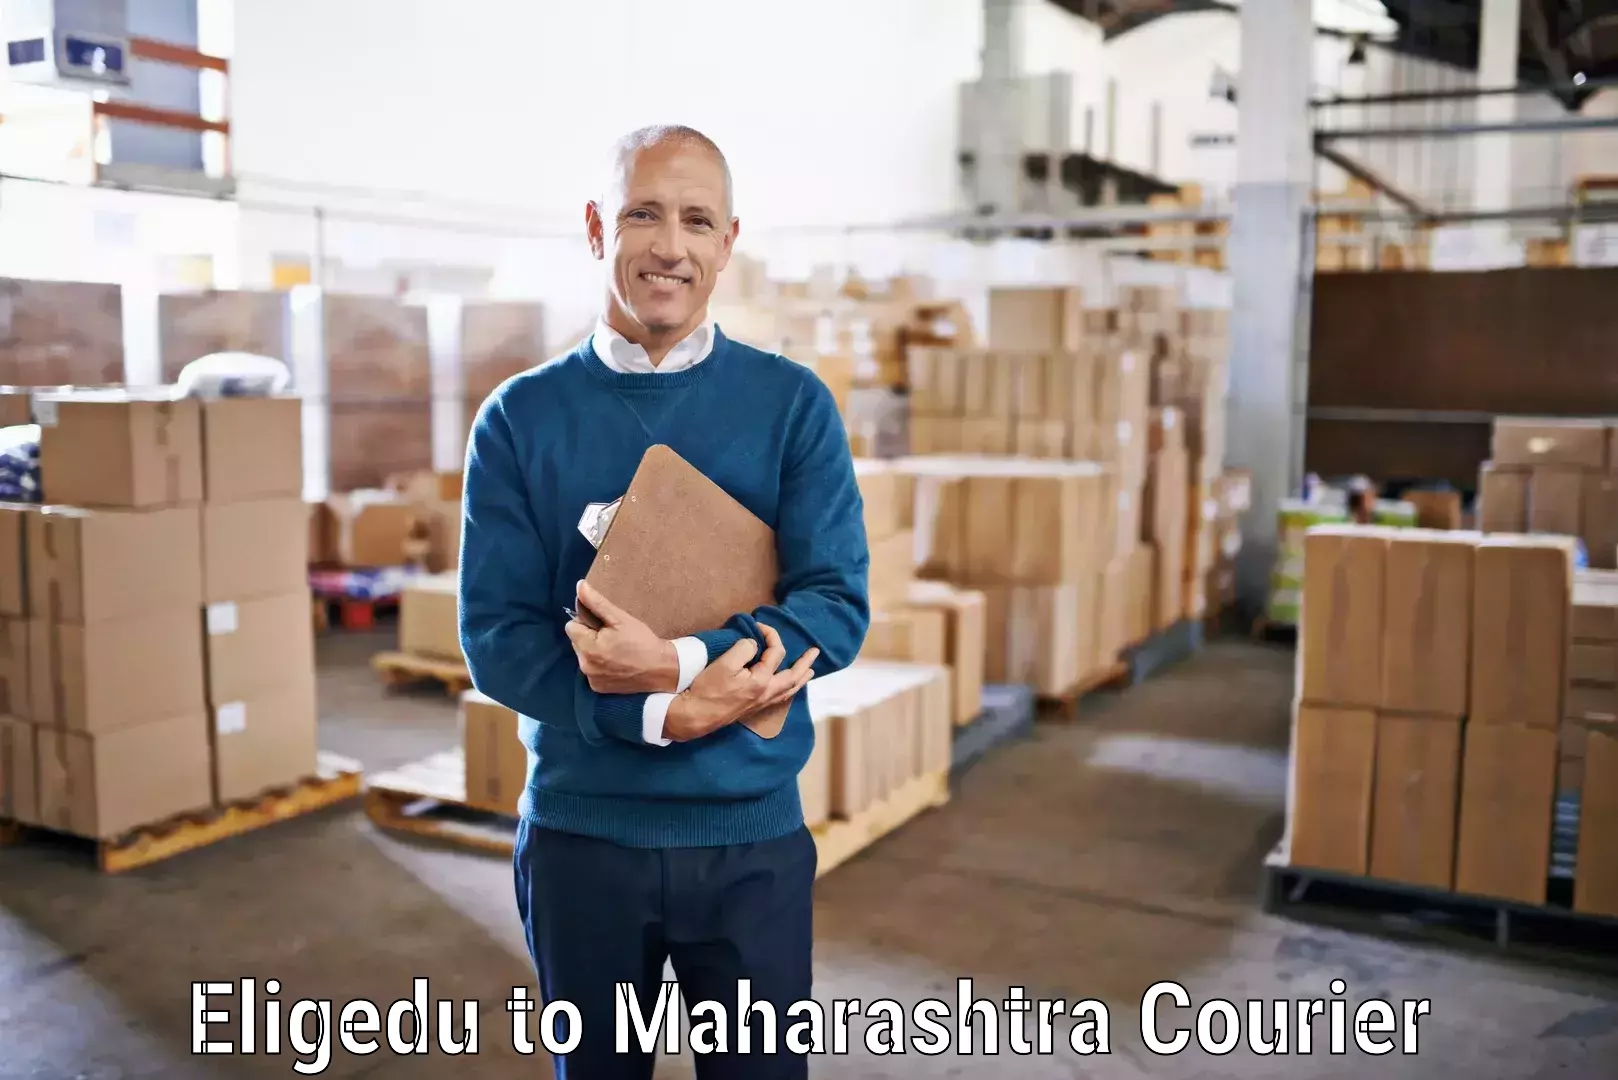 Courier service innovation Eligedu to Mahabaleshwar